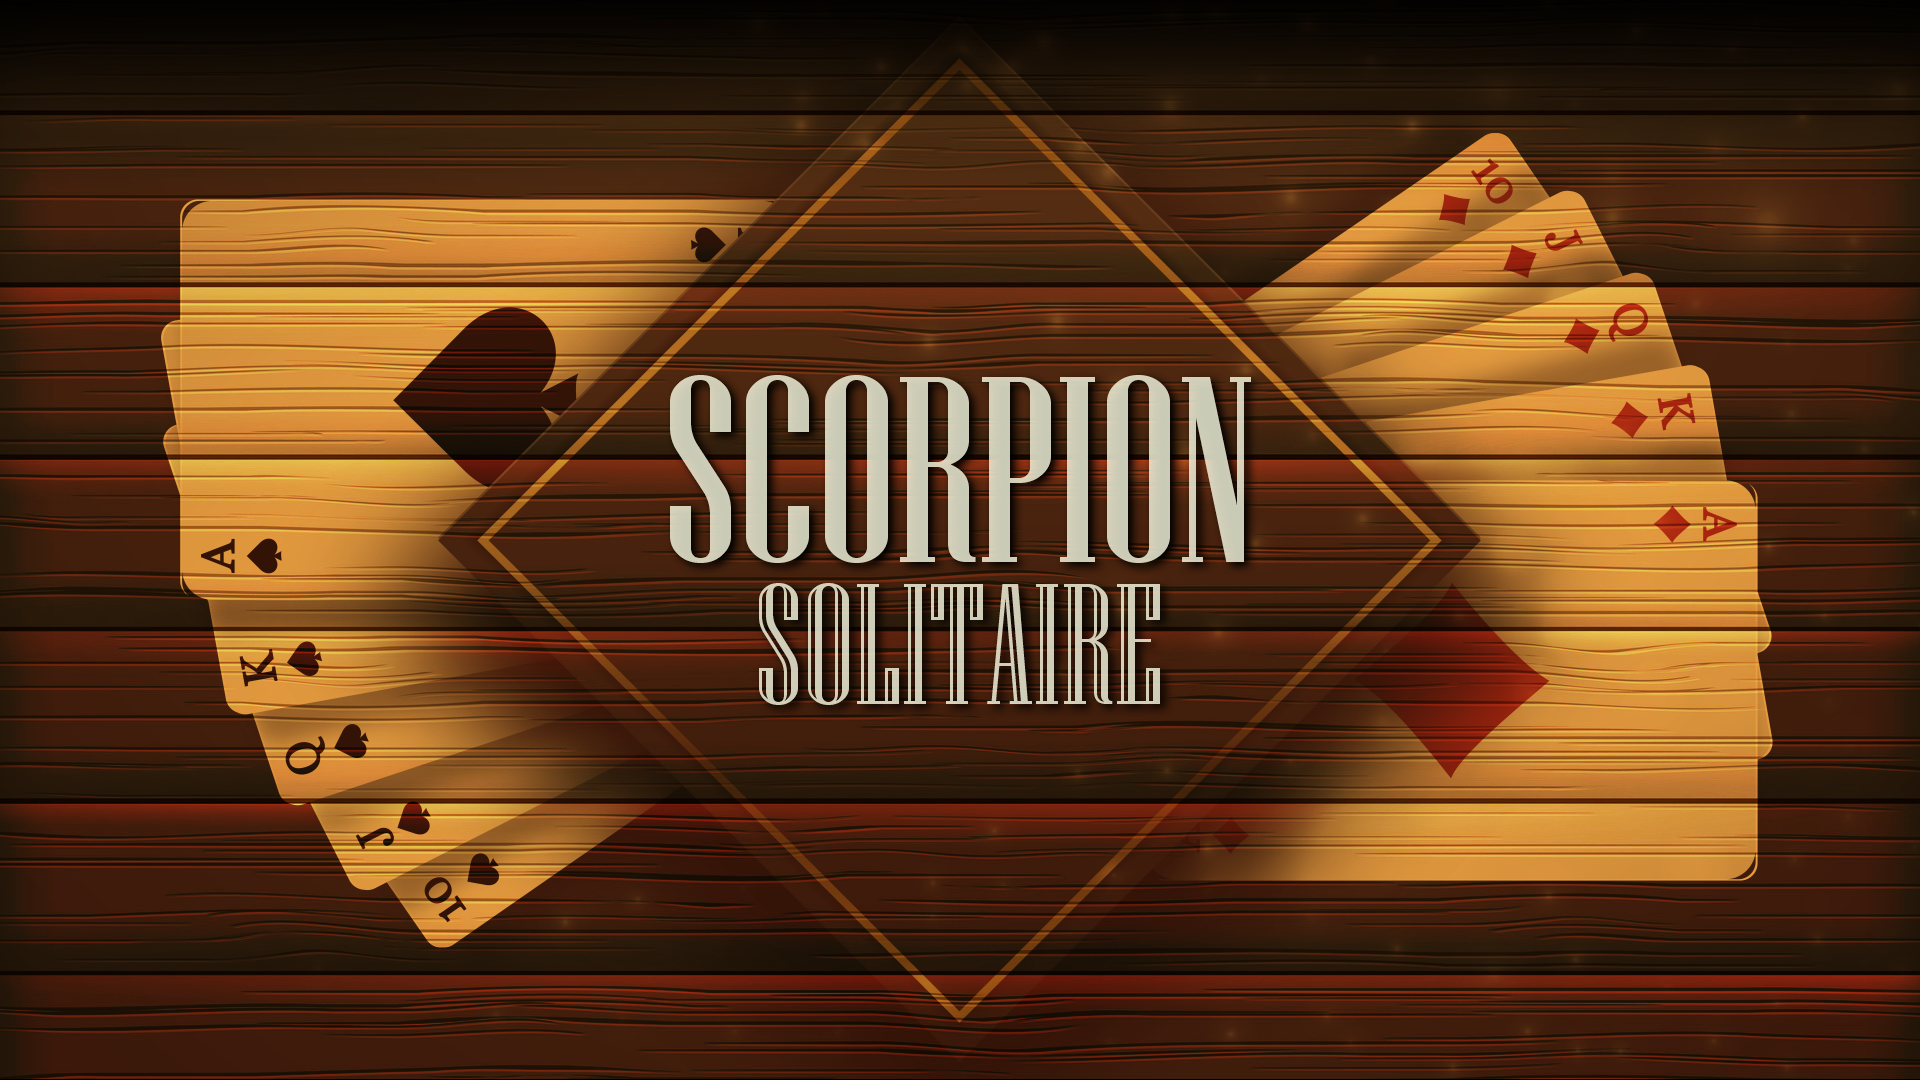 Scorpion Solitaire Online - 100% Free! No Download! No Ads!